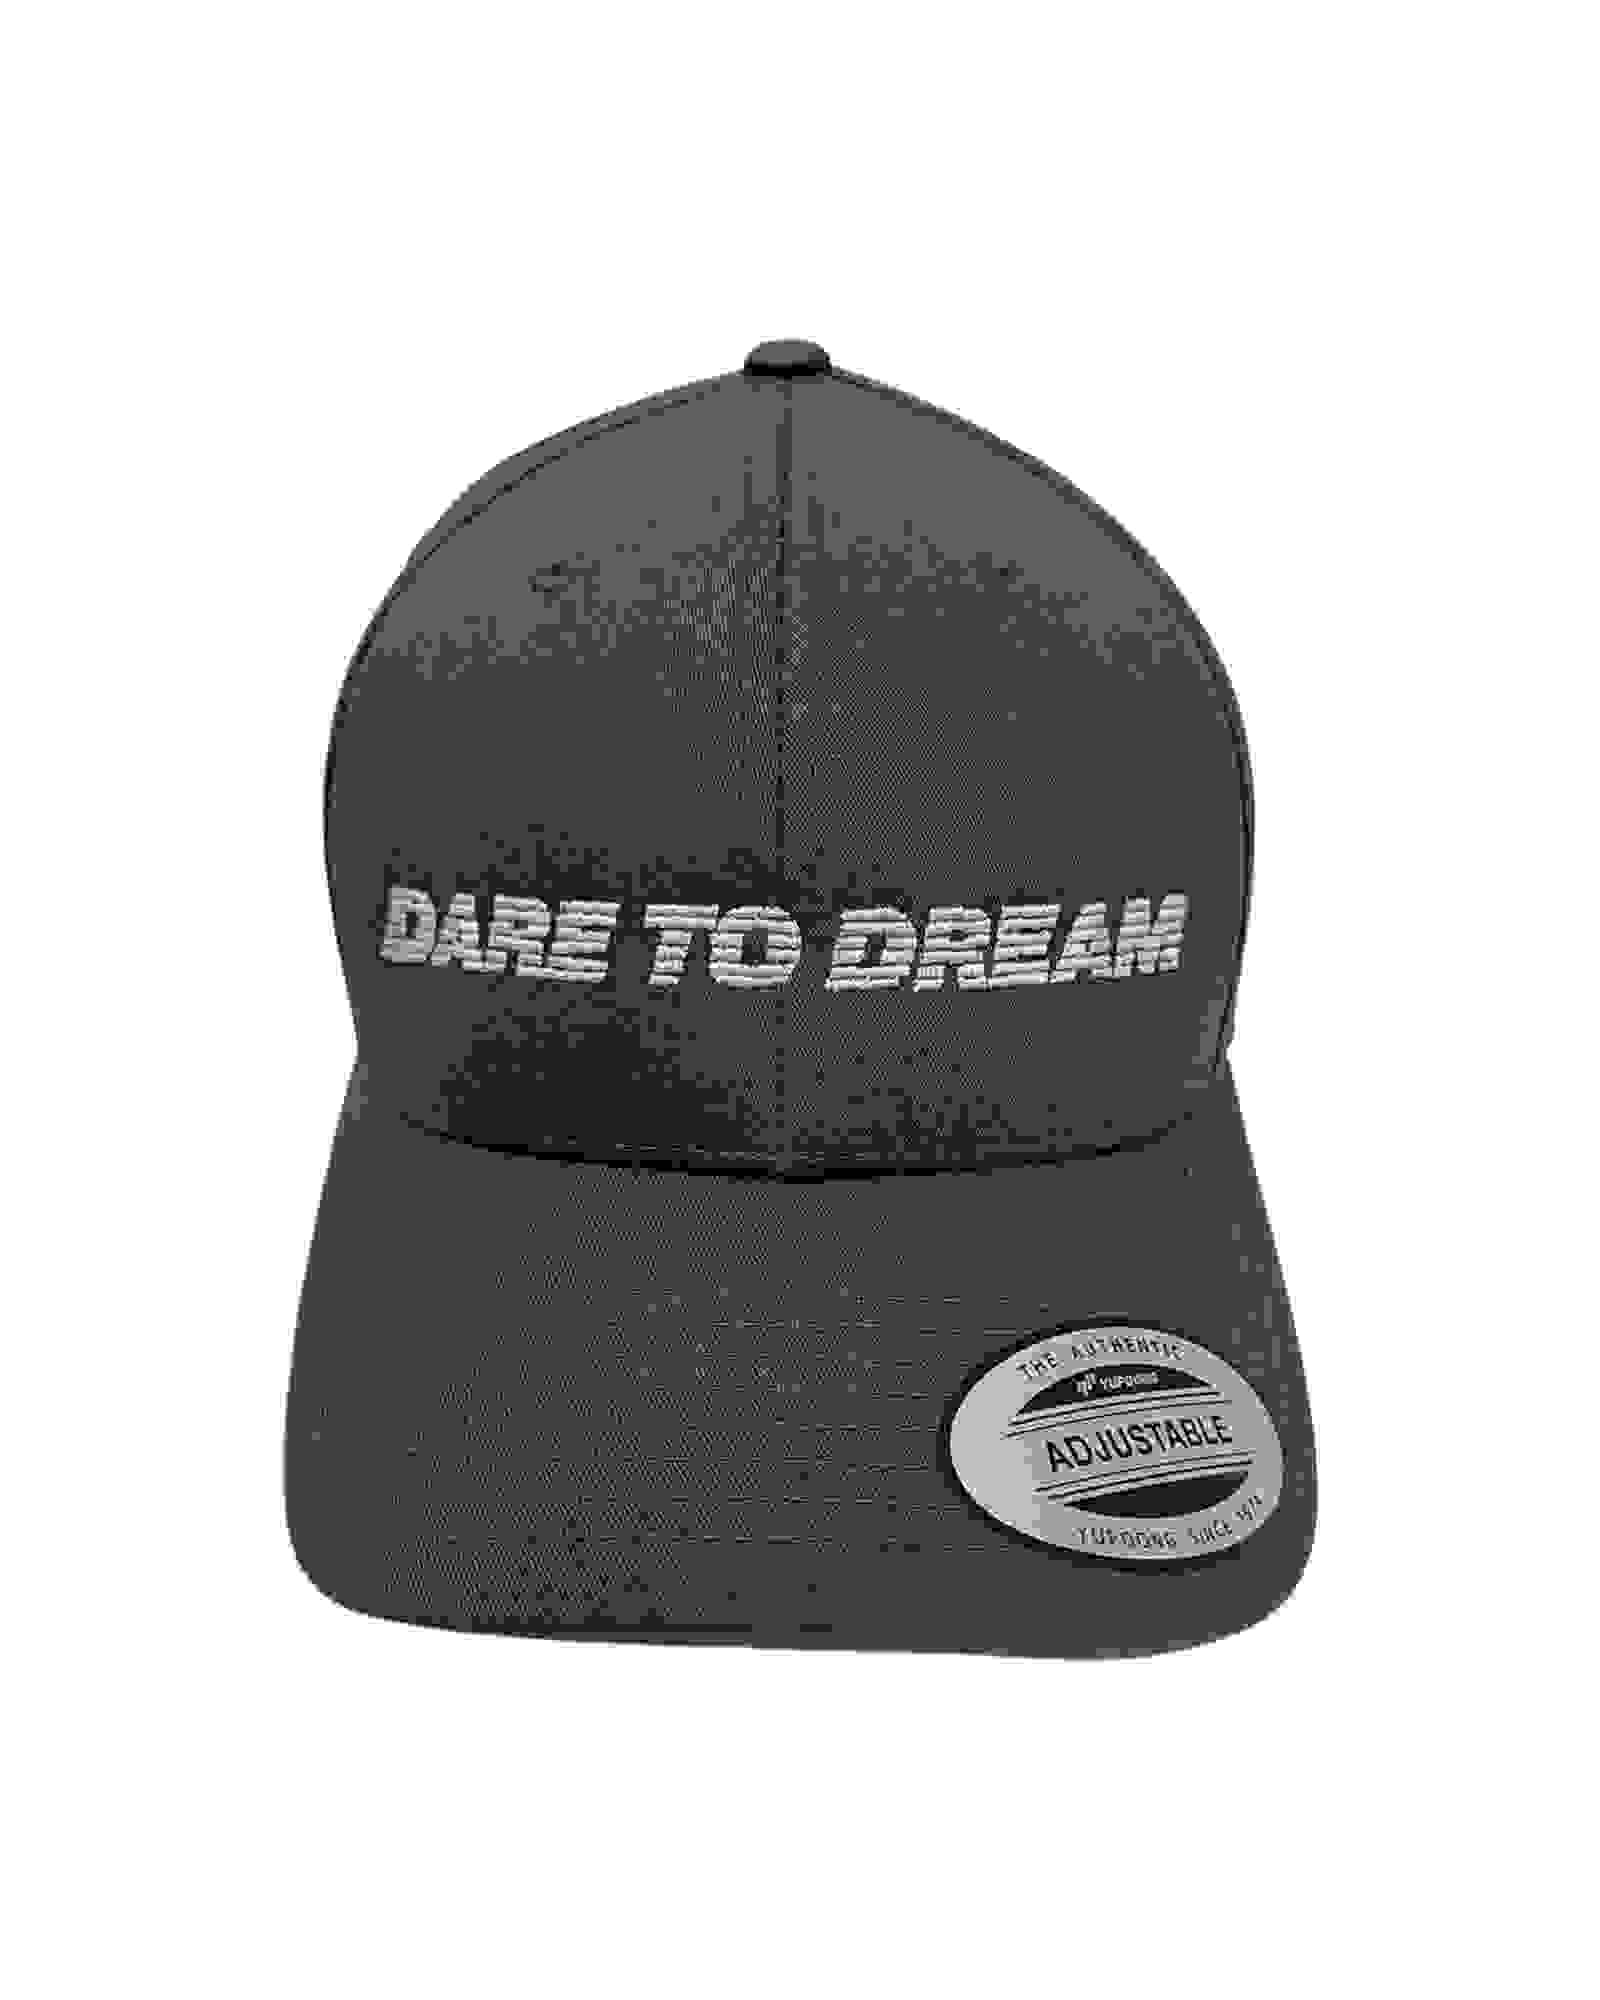 THE SYMBOL Dare To Dream Embroidery Baseball Cap Charcoal/Silver